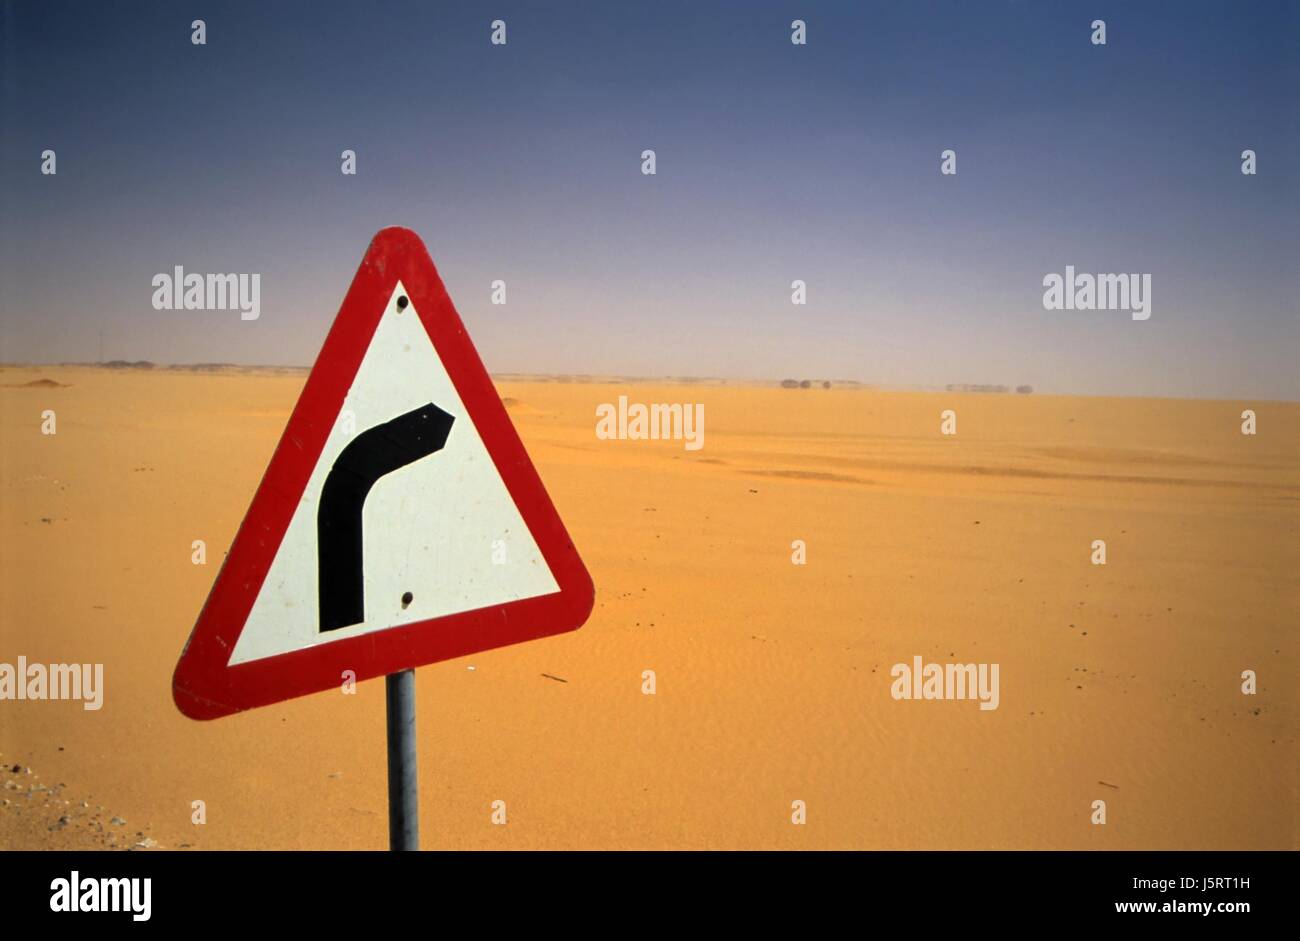 danger desert wasteland africa dryness loneliness heat drought solitary egypt Stock Photo